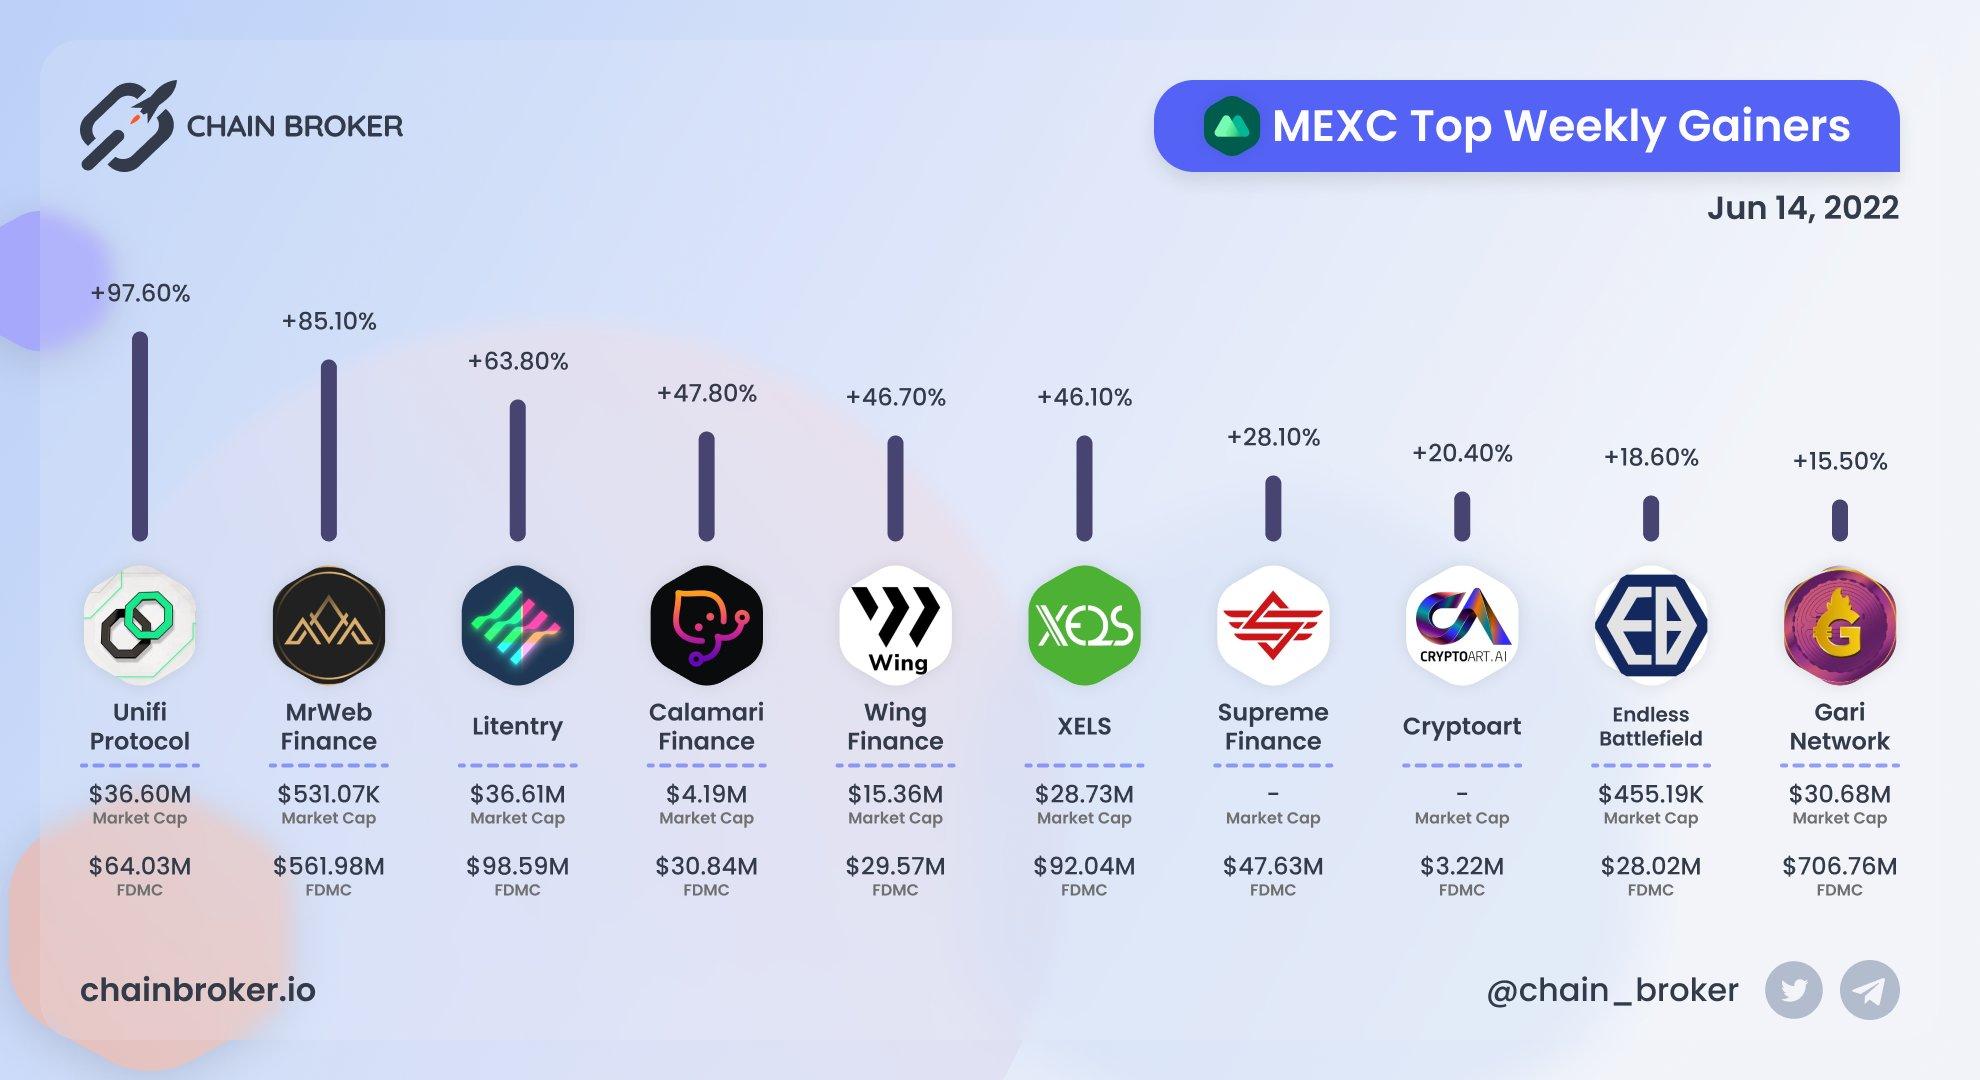 MEXC top weekly gainers